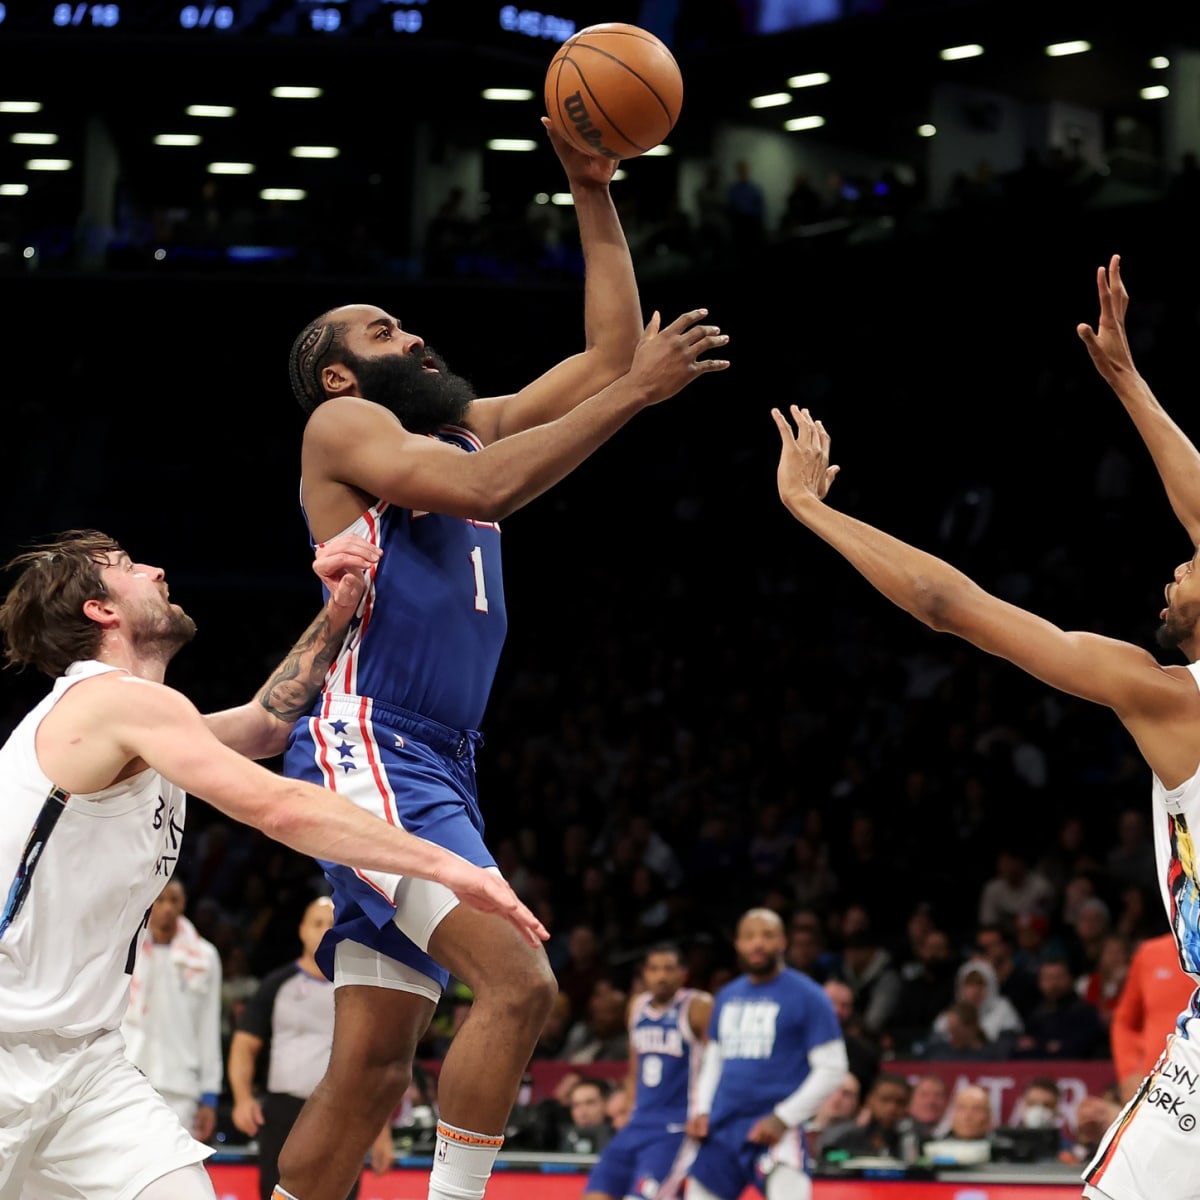 76ers vs. Knicks: Philly Will Get Key Starters Back on Thursday